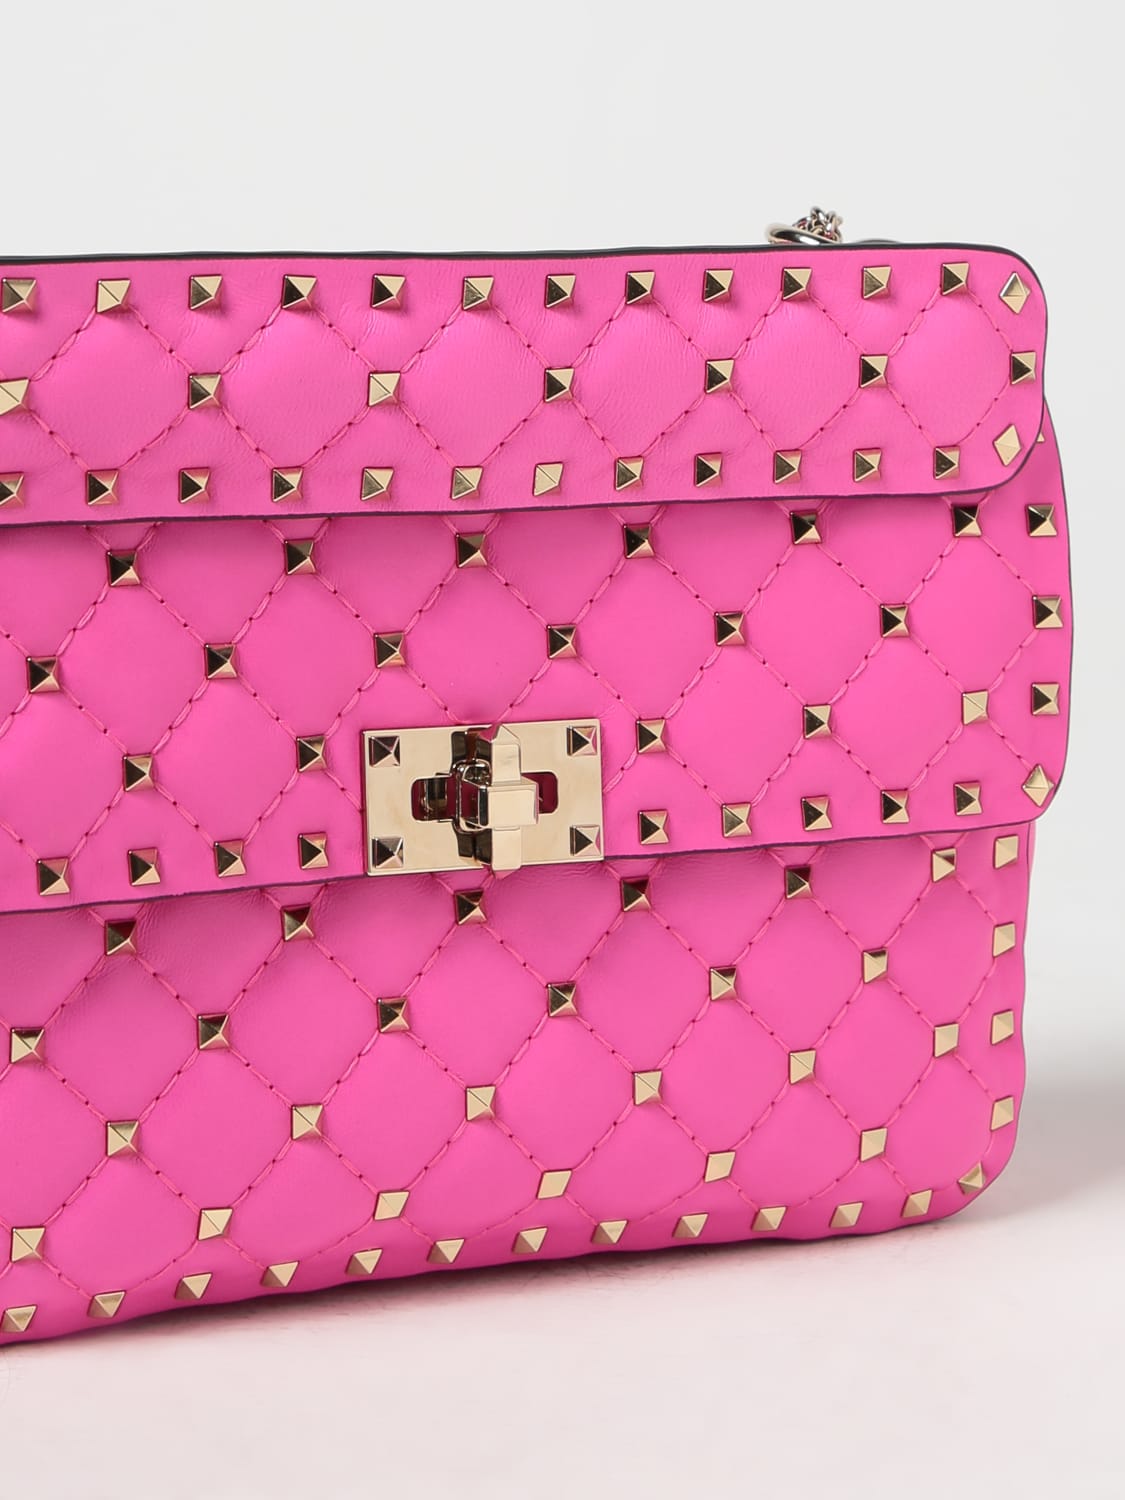 Rockstud spike leather handbag Valentino Garavani Pink in Leather